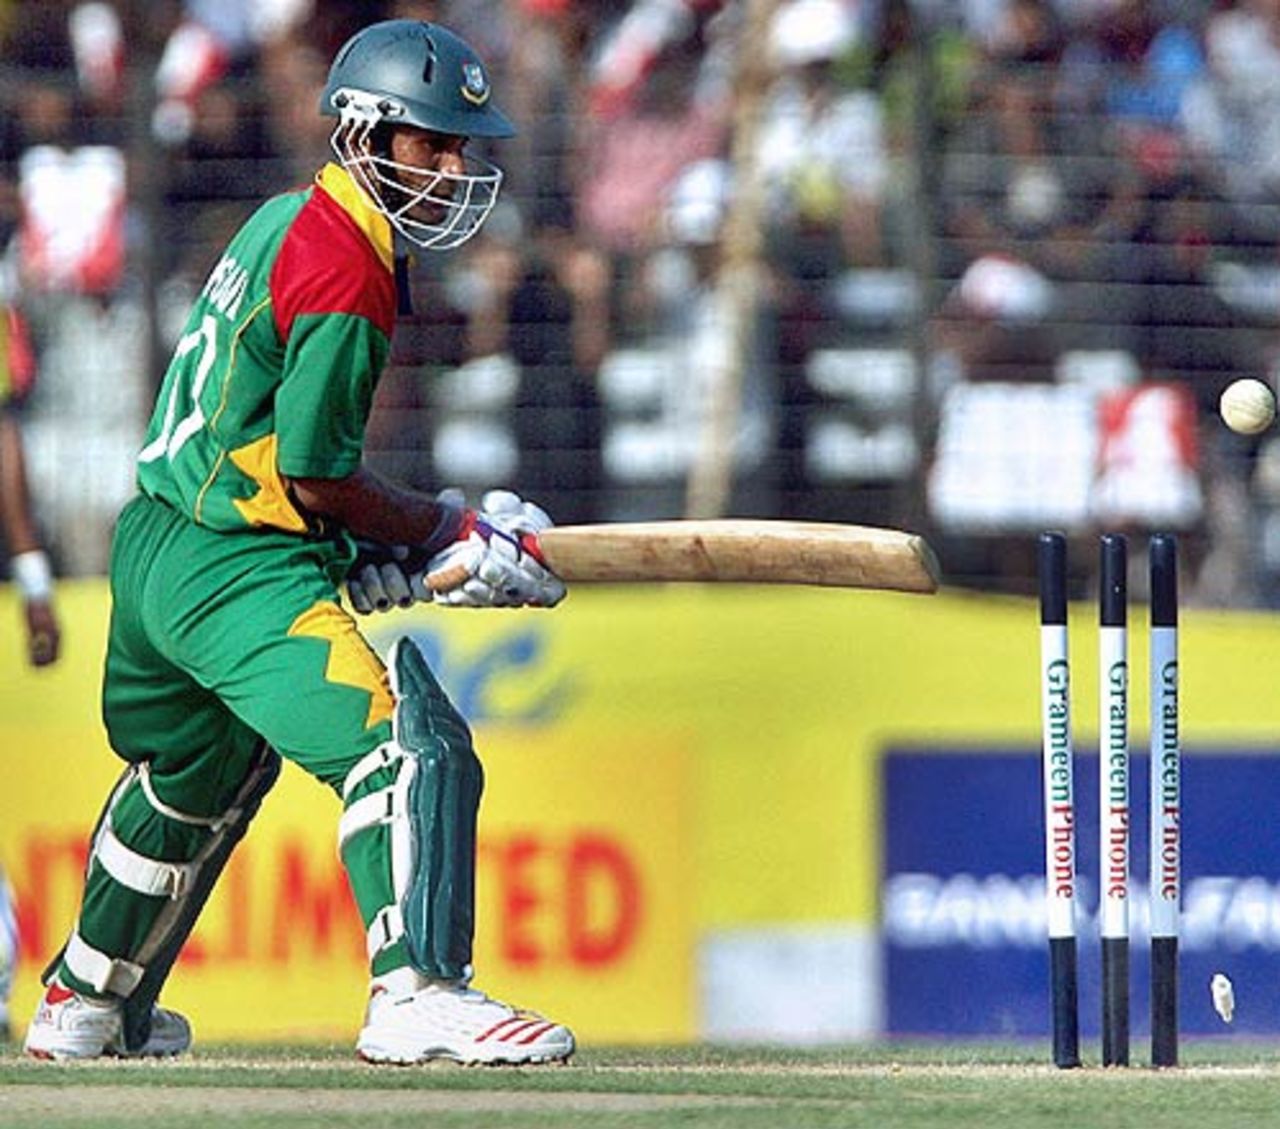 Khaled Mashud was bowled by Michael Clarke for 37, Bangladesh v Australia, 2nd ODI, Fatullah, April 26, 2006